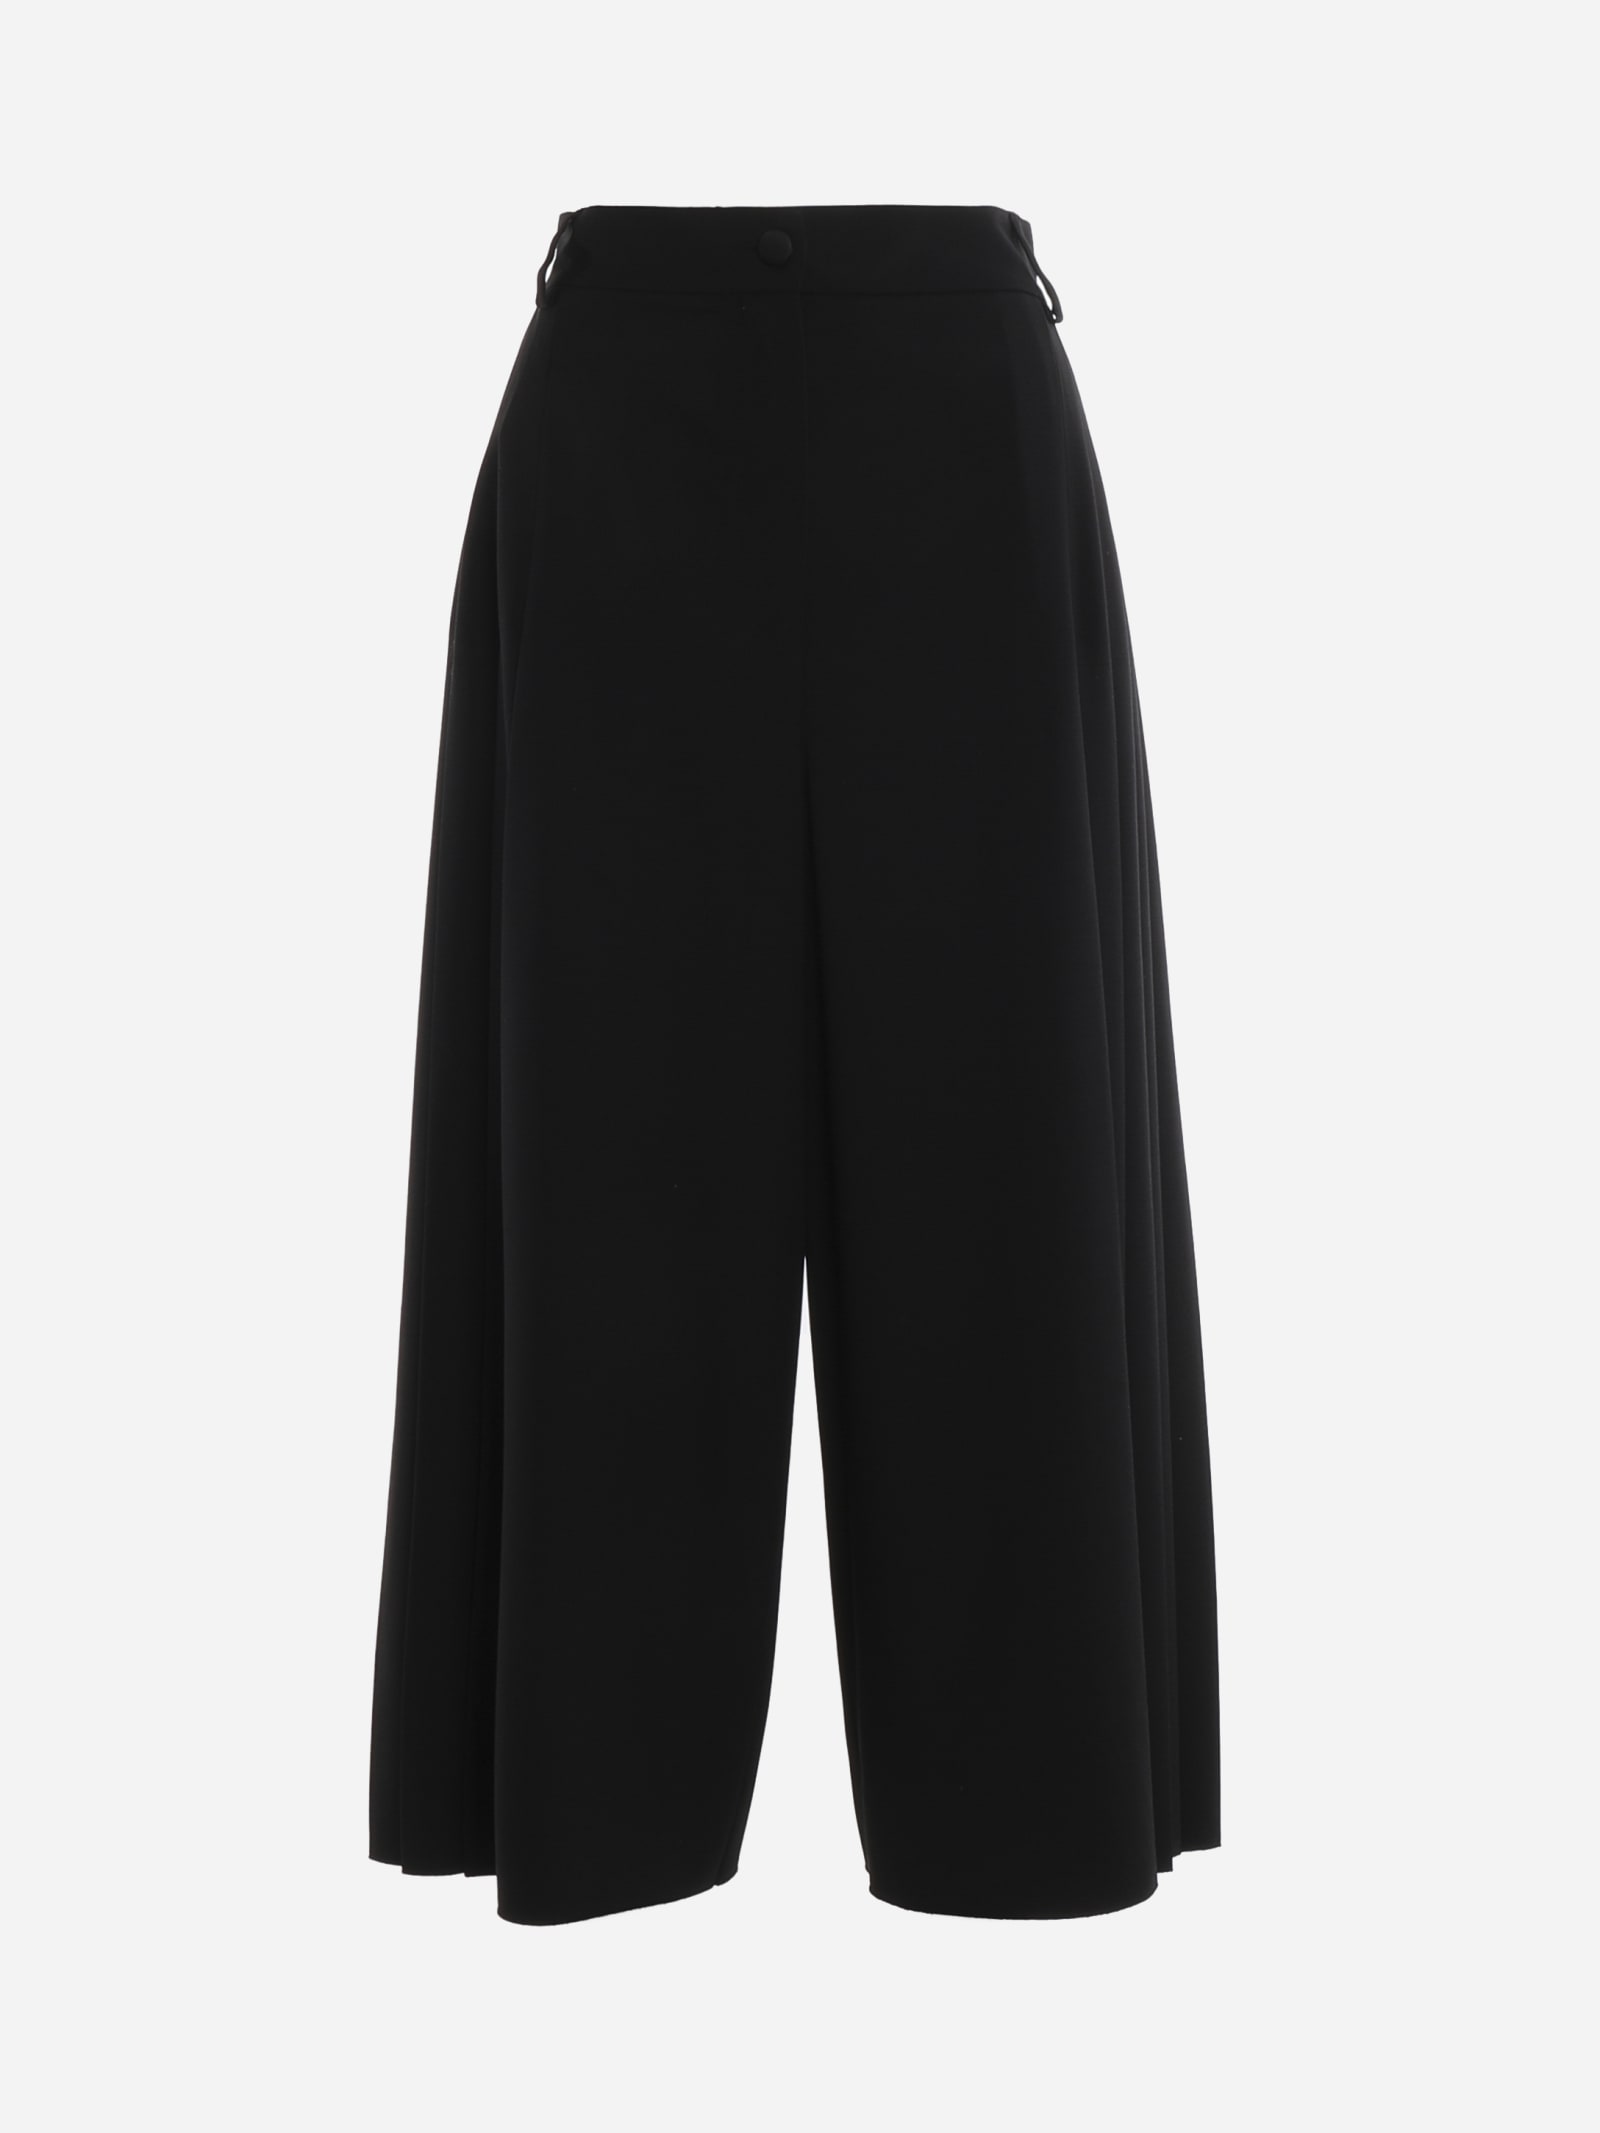 Dolce & Gabbana Black Stretch Wool Cropped Pants